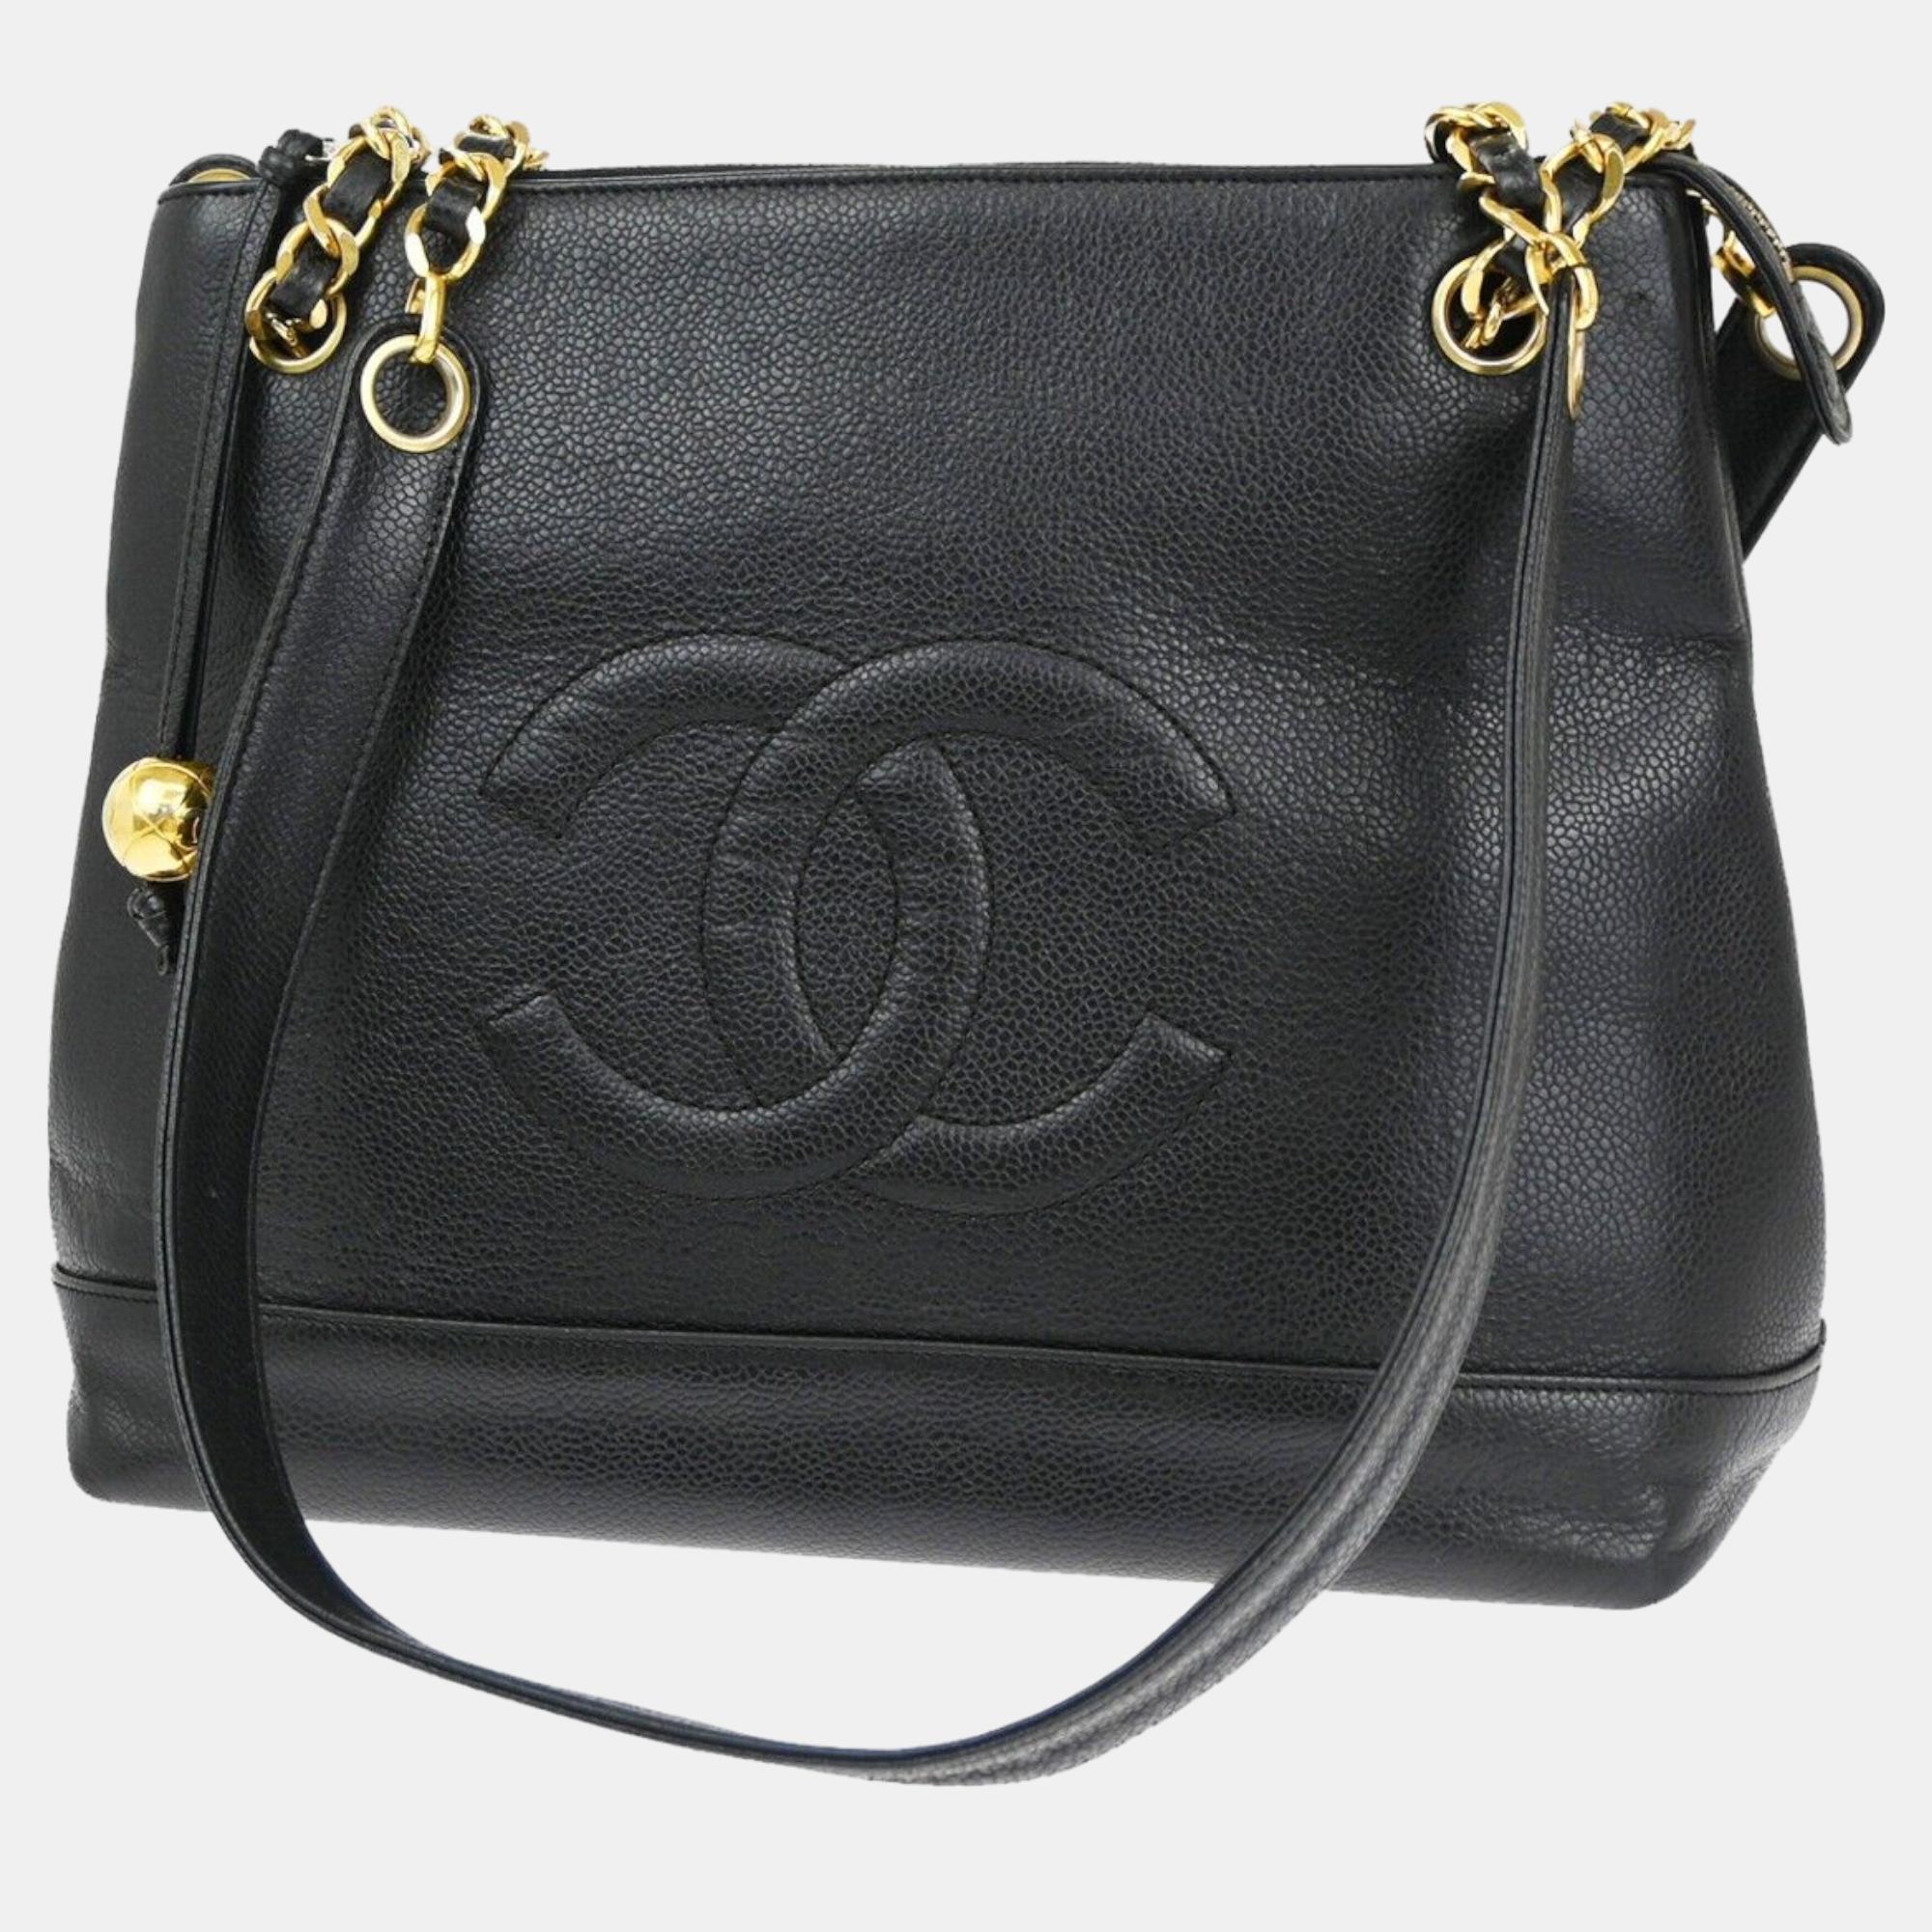 

Chanel Black Caviar Leather CC Tote Bag